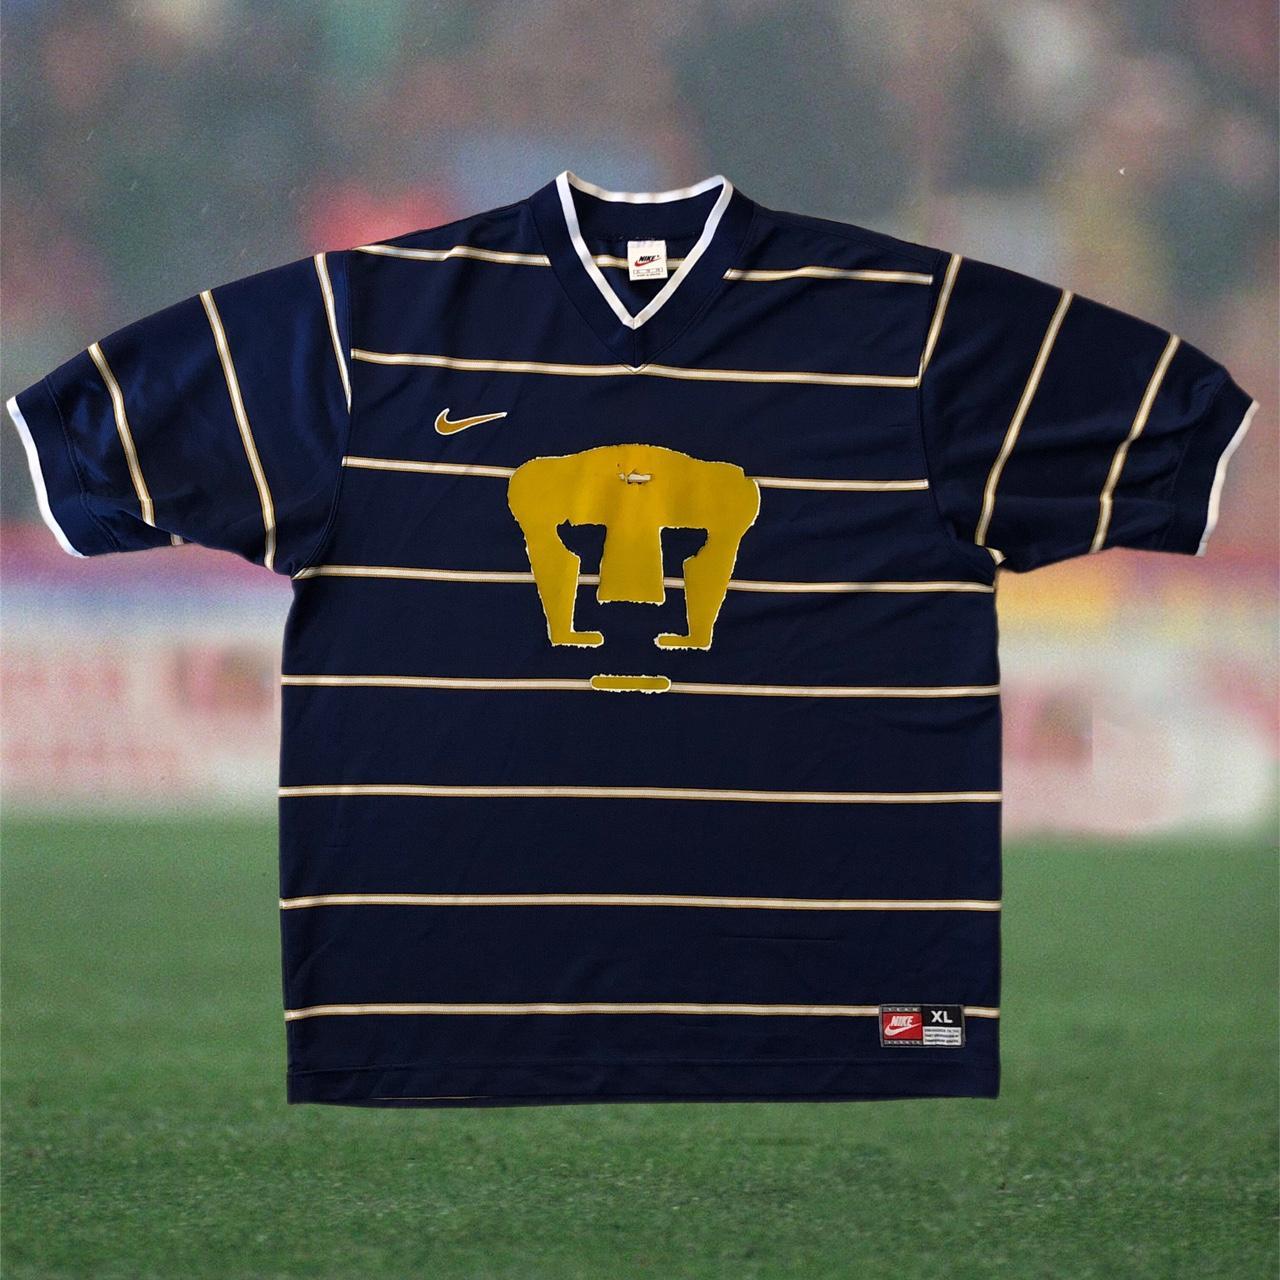 Nike Men's T-Shirt - Navy - XL